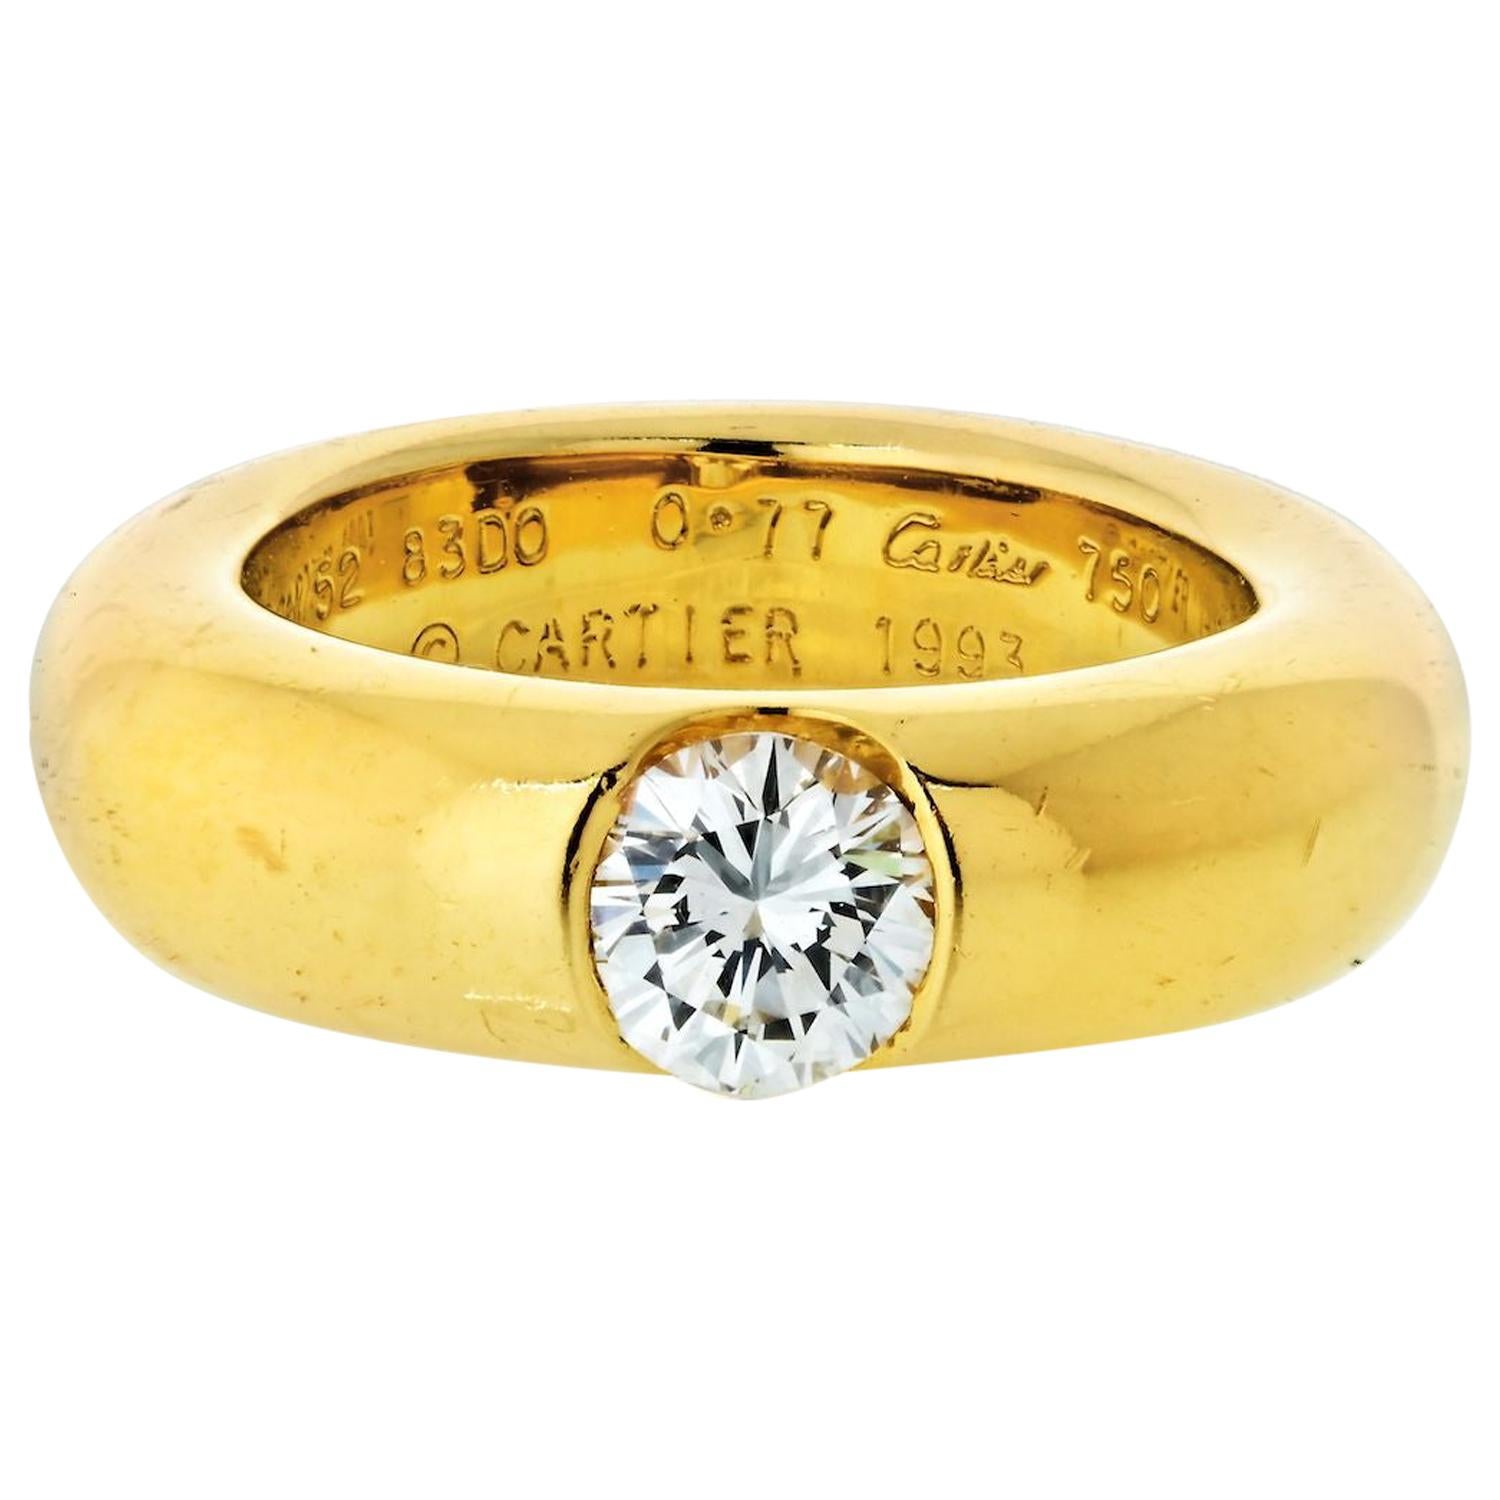 Cartier 18 Karat Yellow Gold 0.77 Carat Round Cut Diamond Engagement Ring